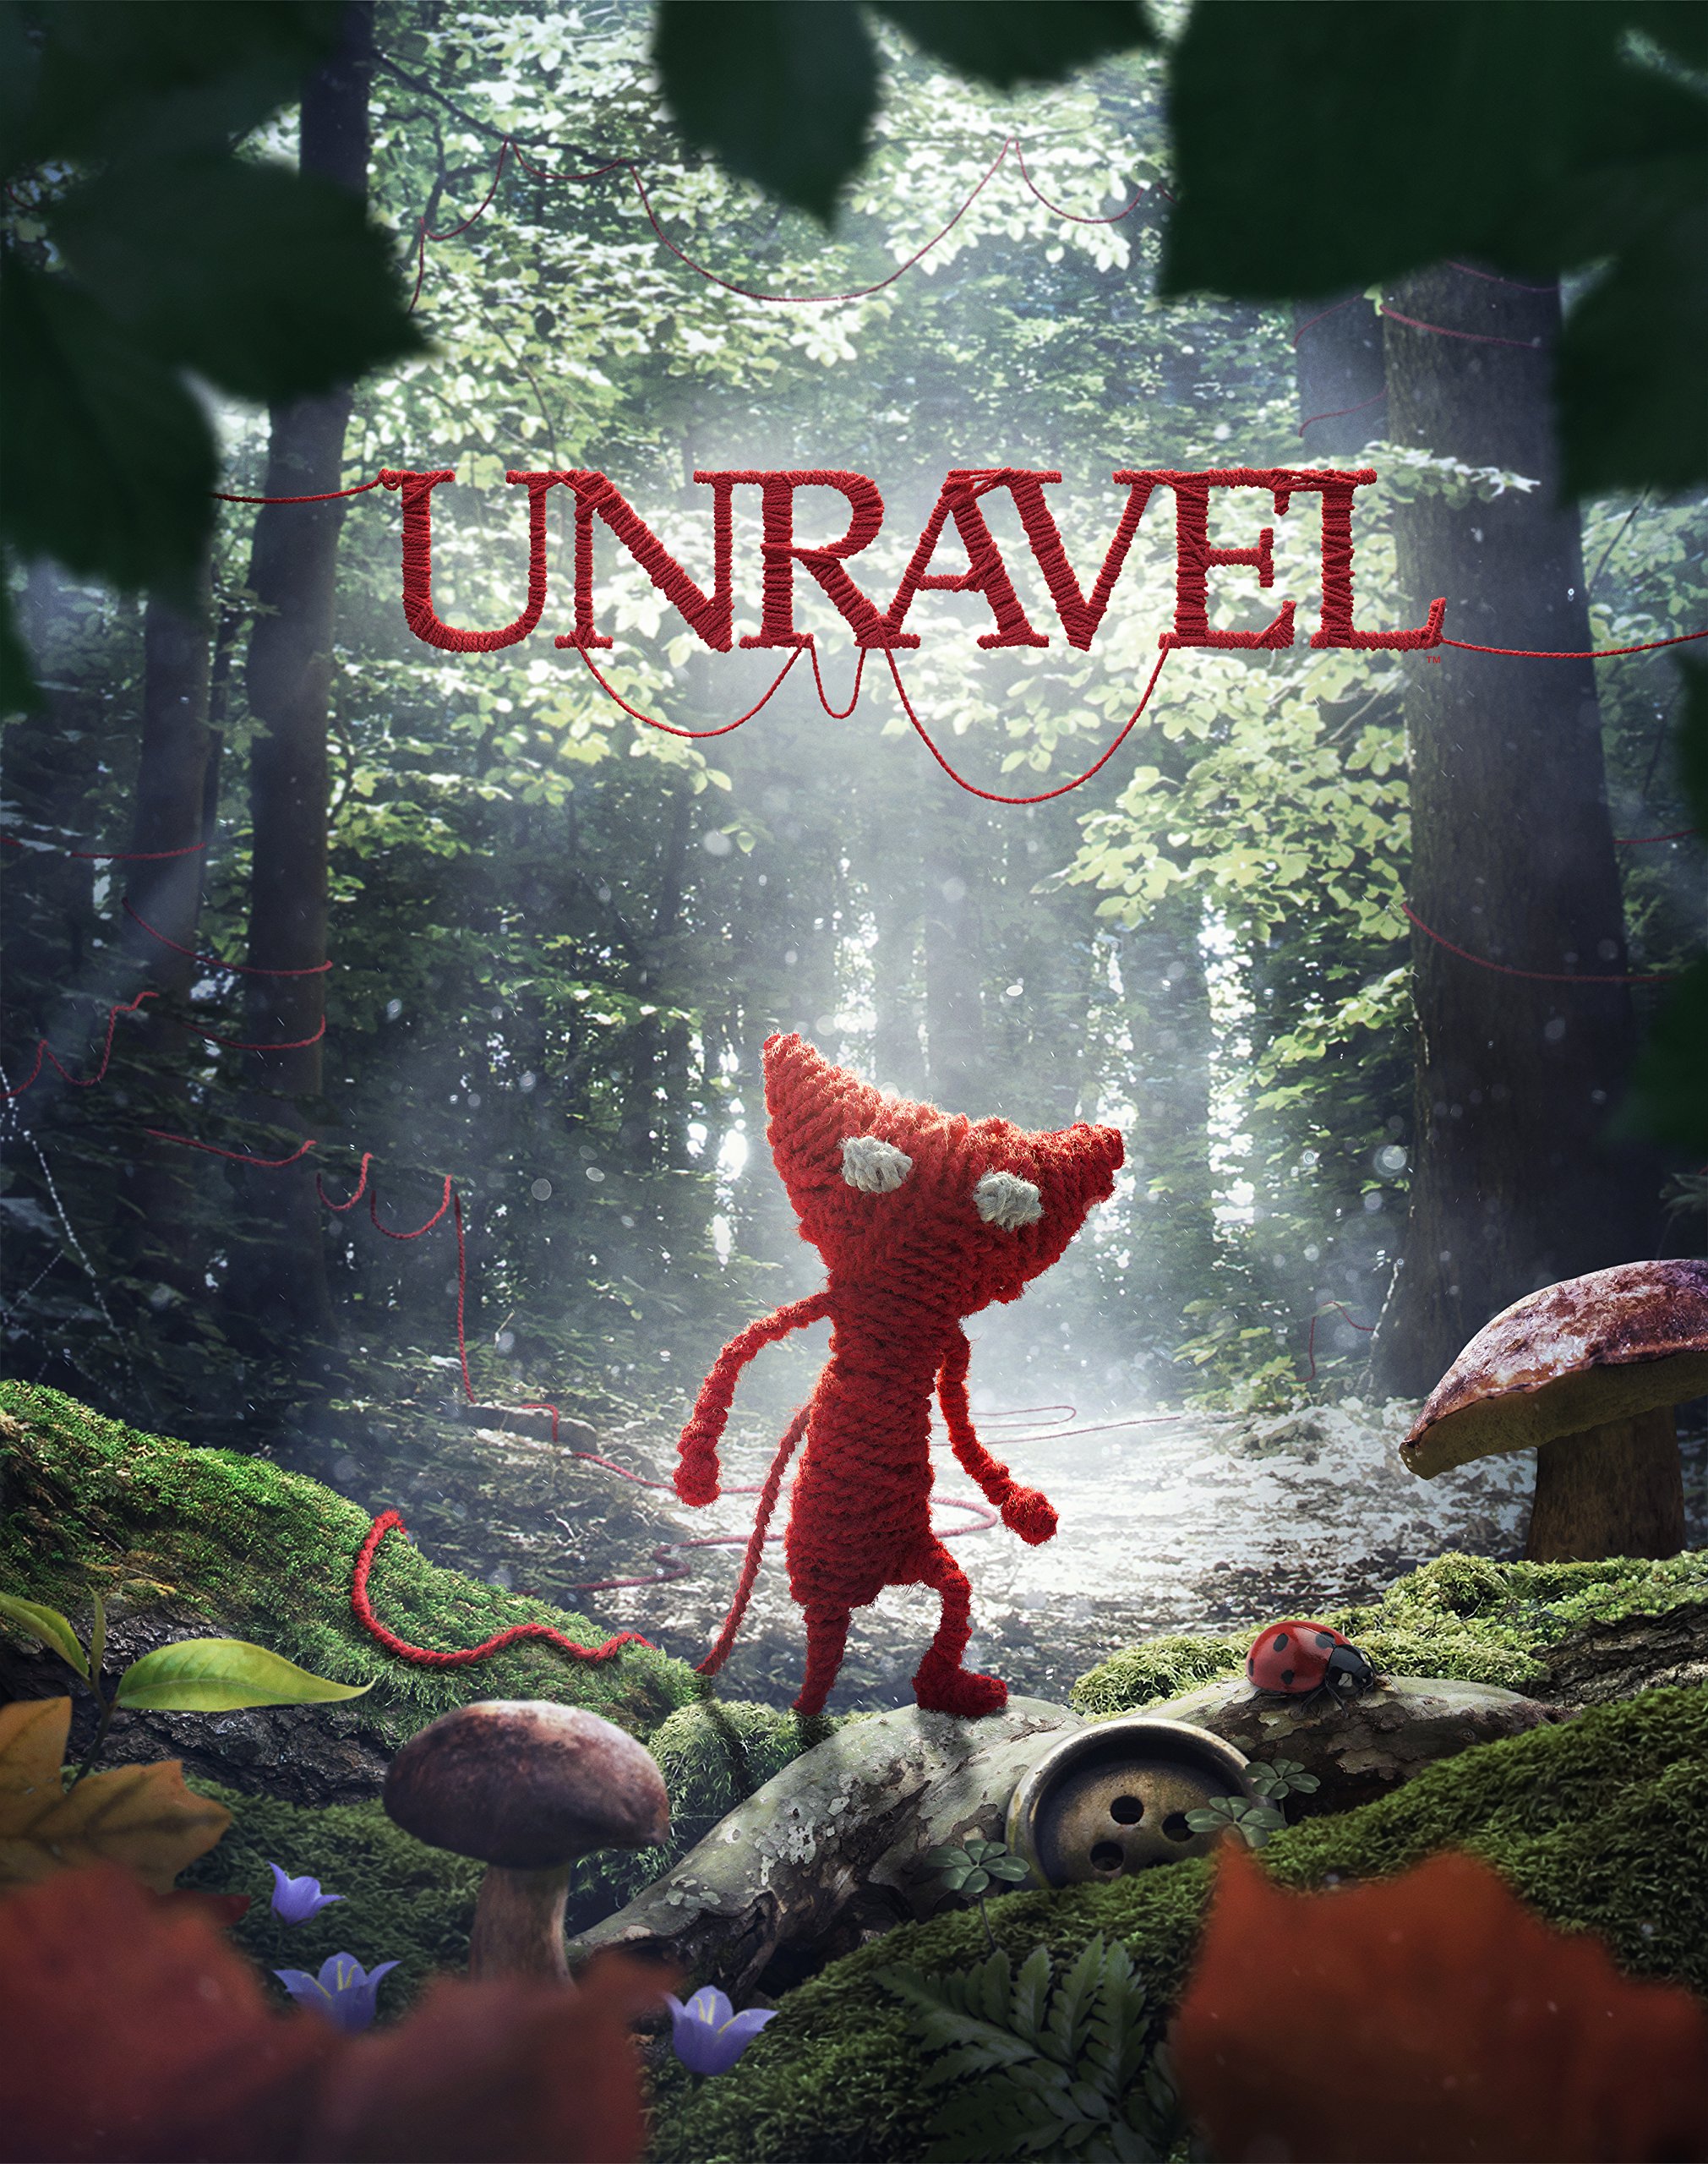 Unravel or Unravel 2 - Origin PC [Online Game Code] $4